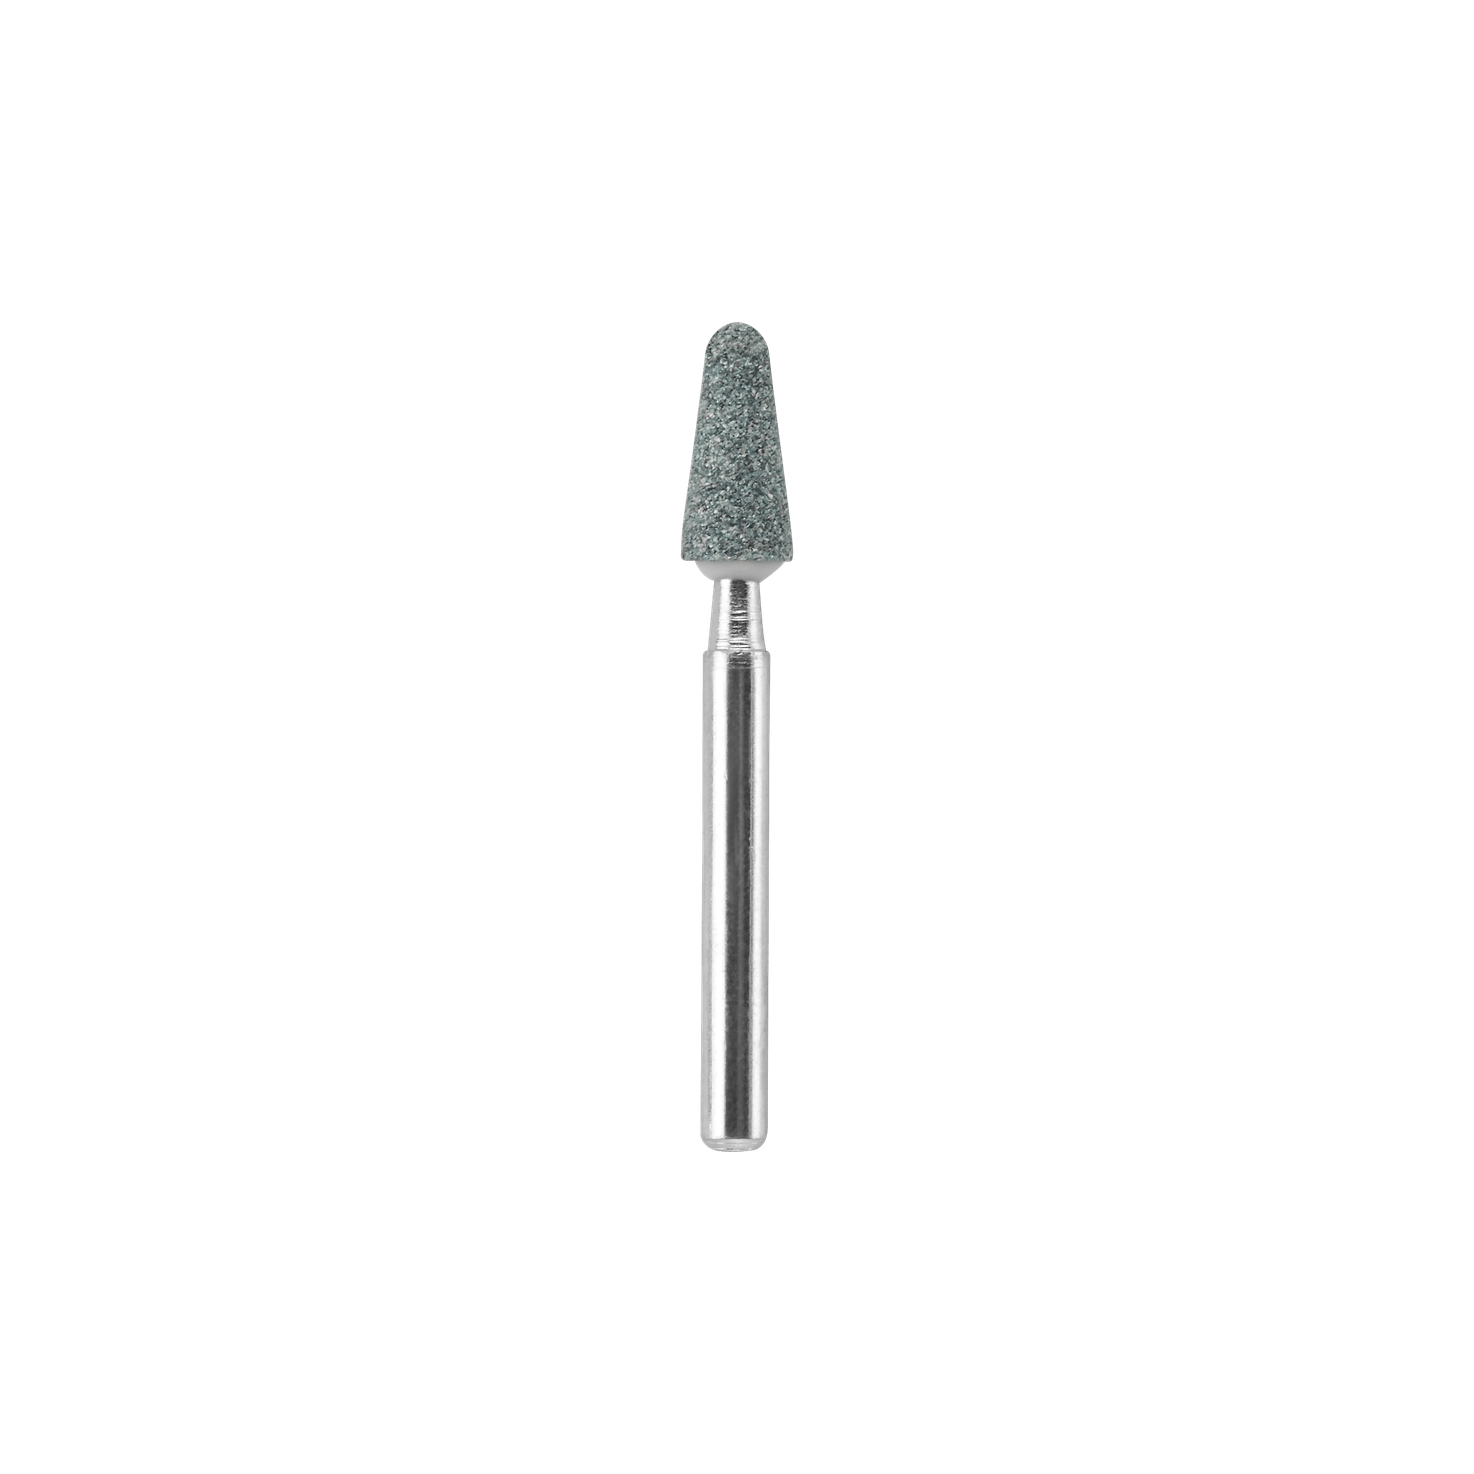 Dremel 4300 1.8 amps Corded Rotary Tool Kit - Ace Hardware